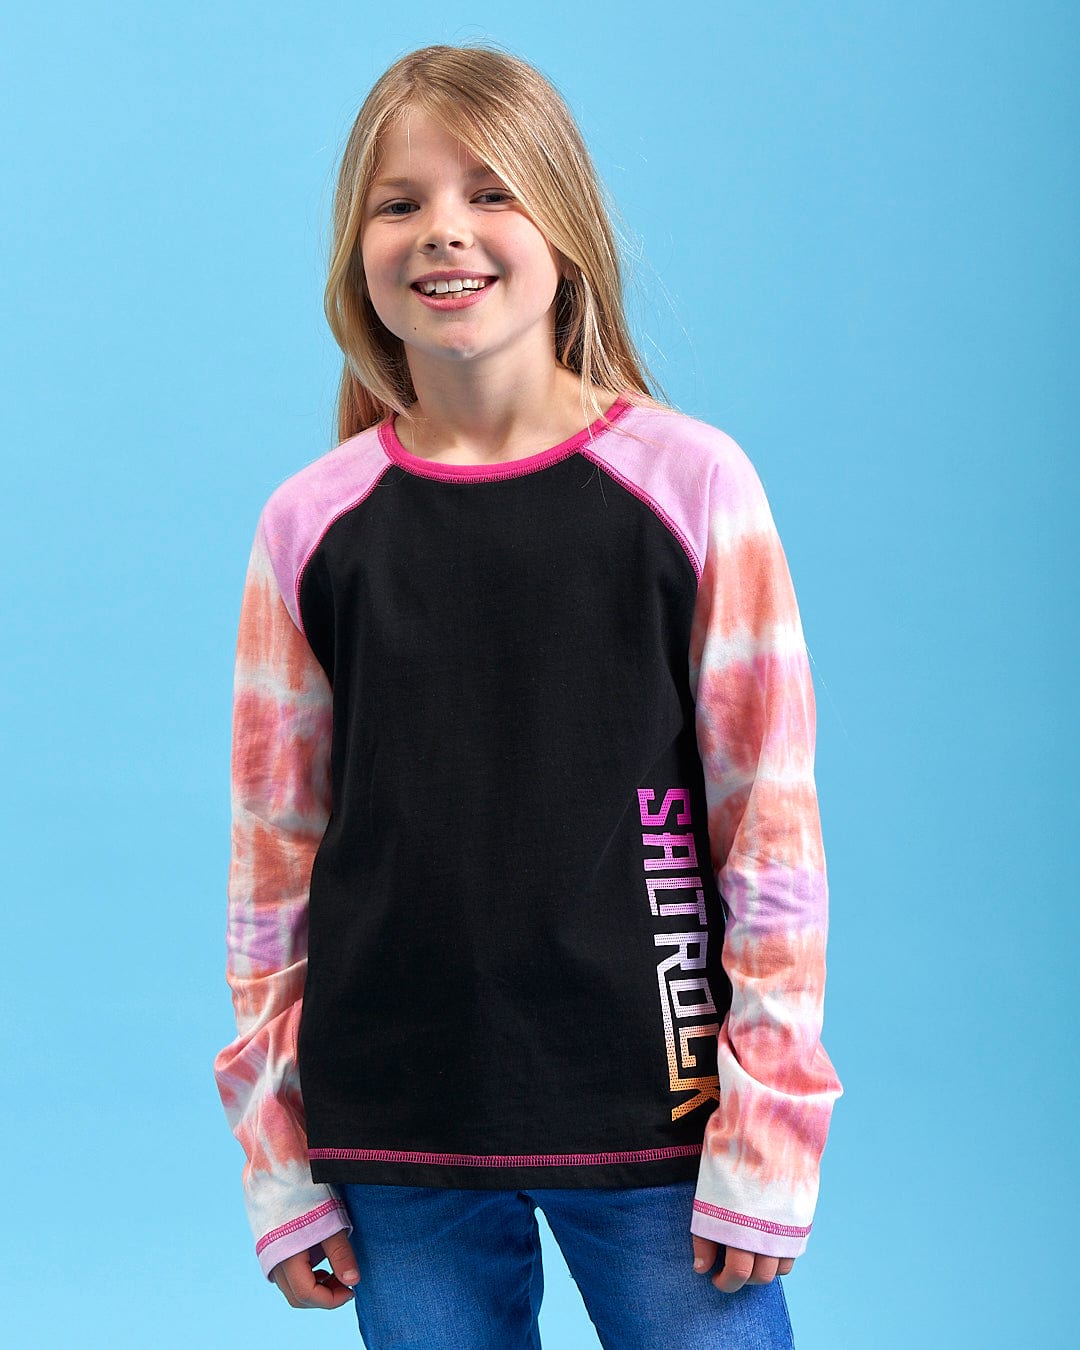 A young girl wearing an Elektra Tex - Kids Tie Dye Long Sleeve T-Shirt - Black by Saltrock.